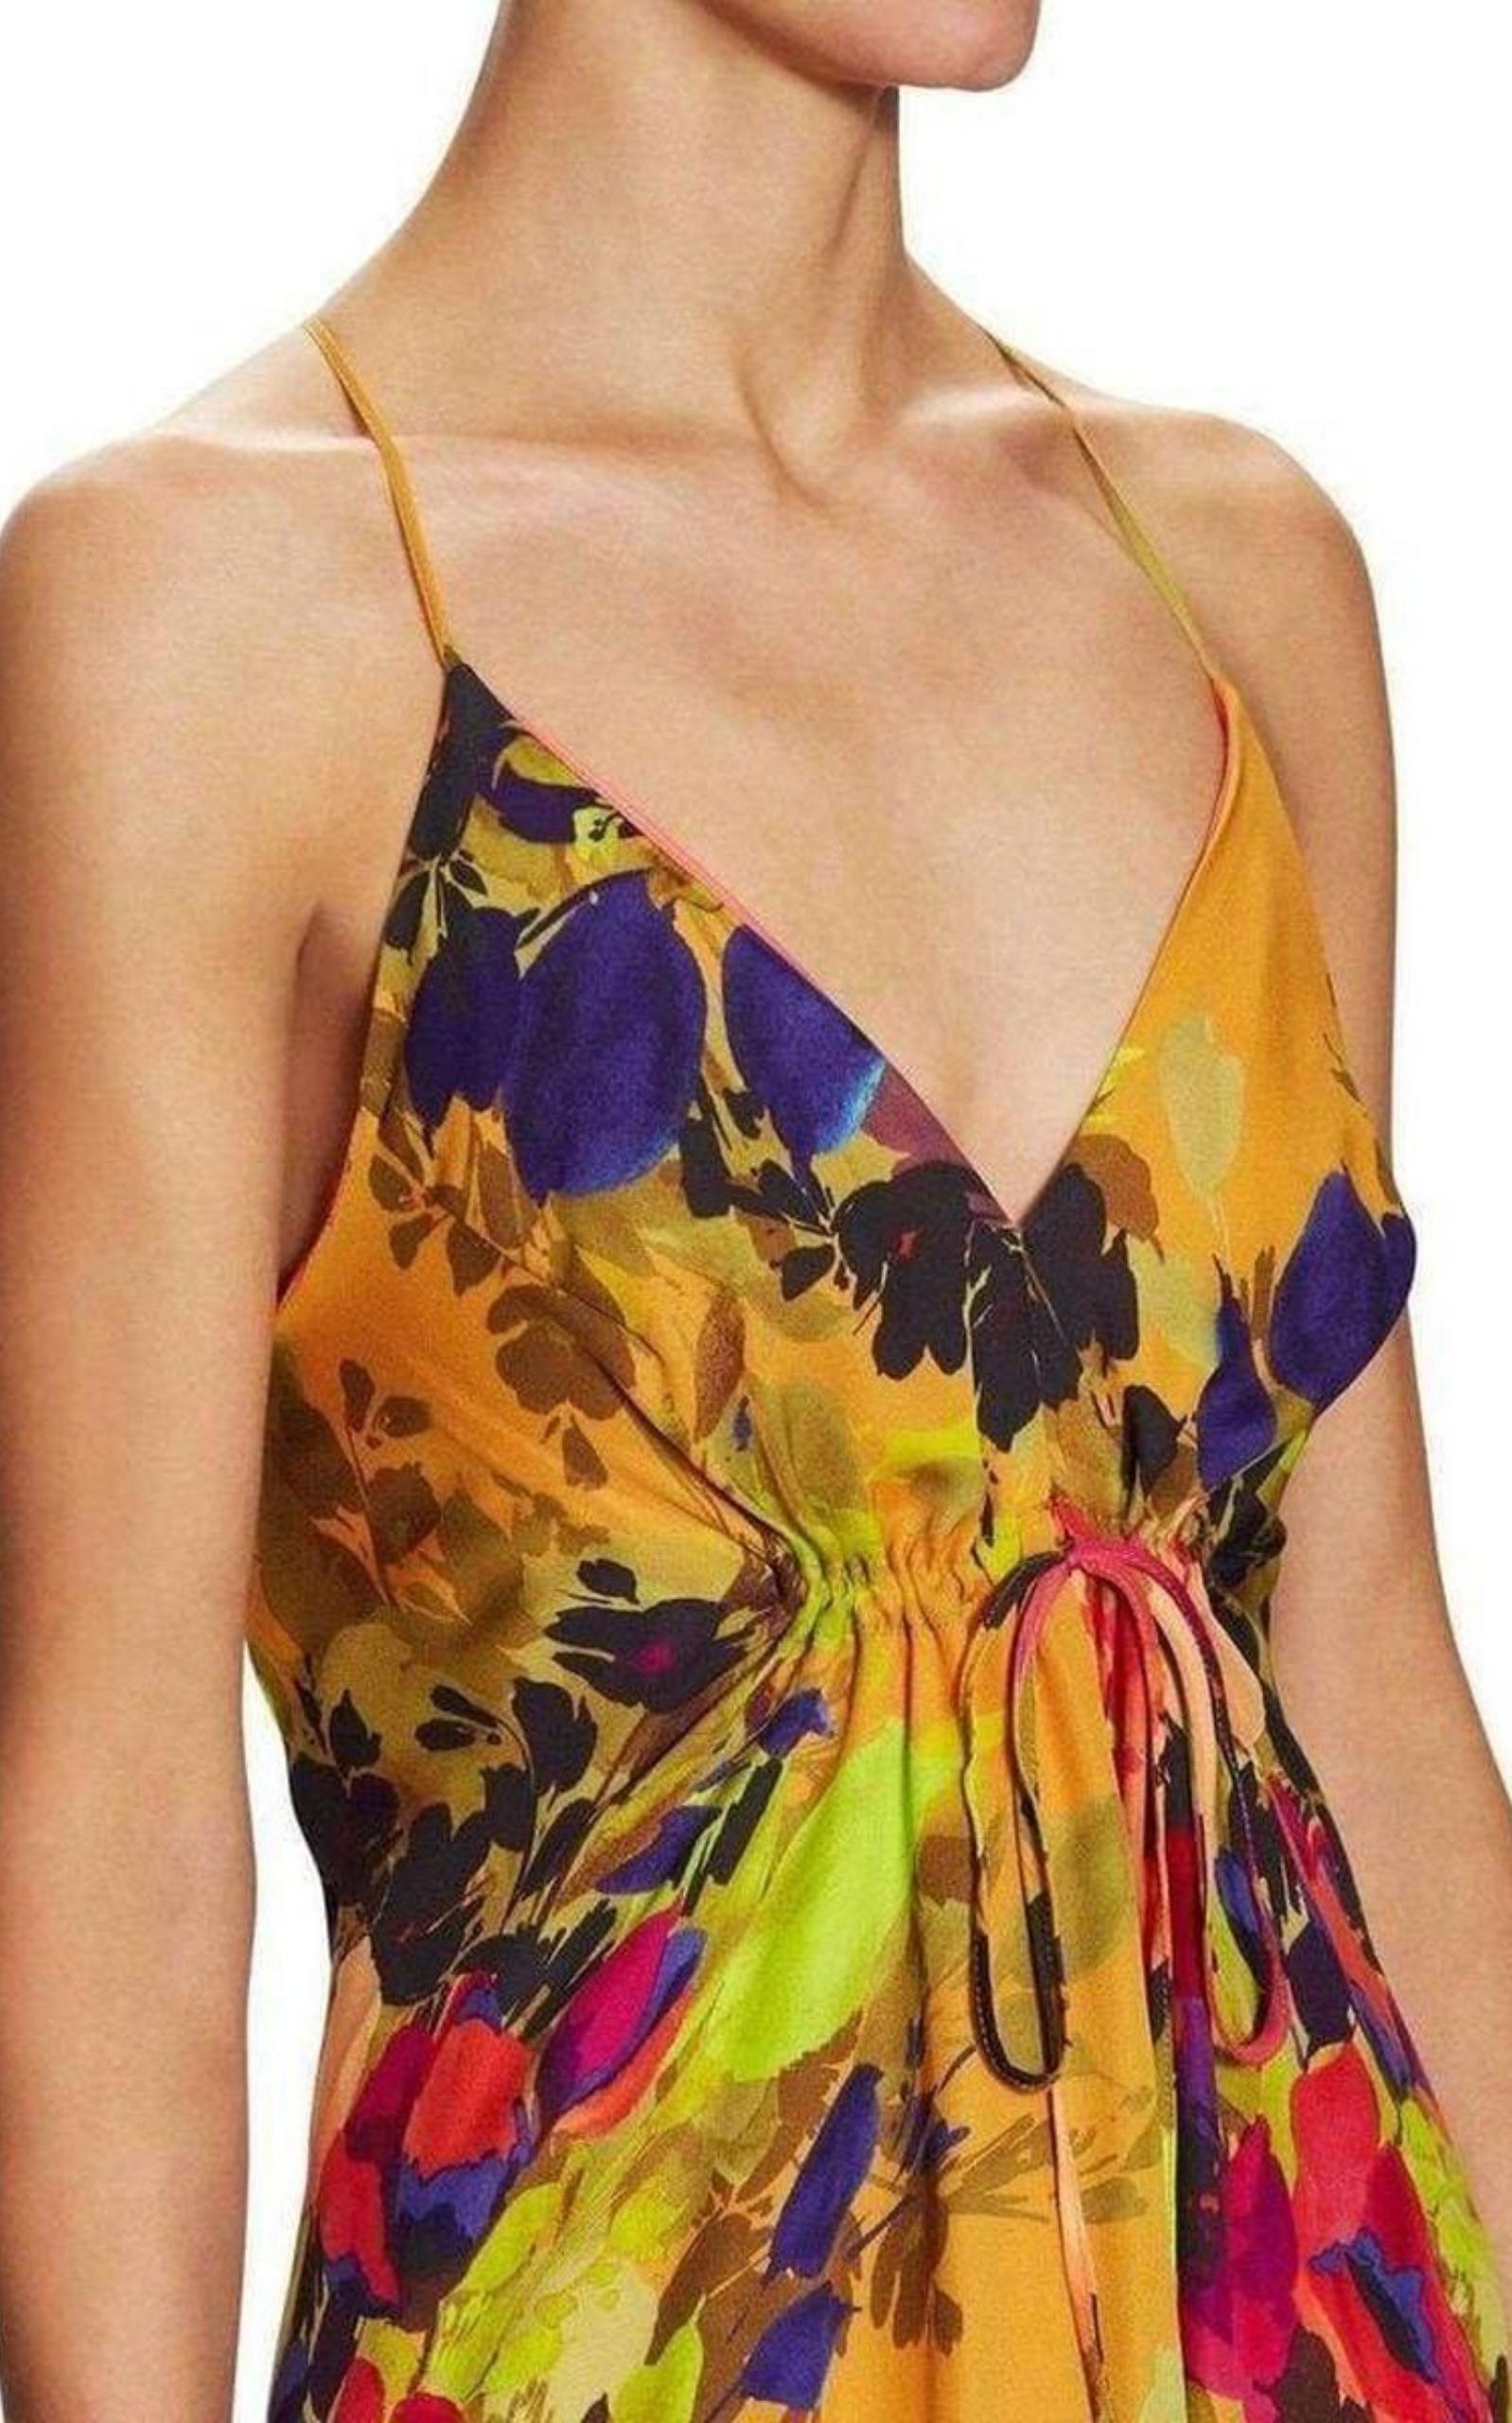  Nicole MillerAngelina Botanic Silk Maxi Dress - Runway Catalog